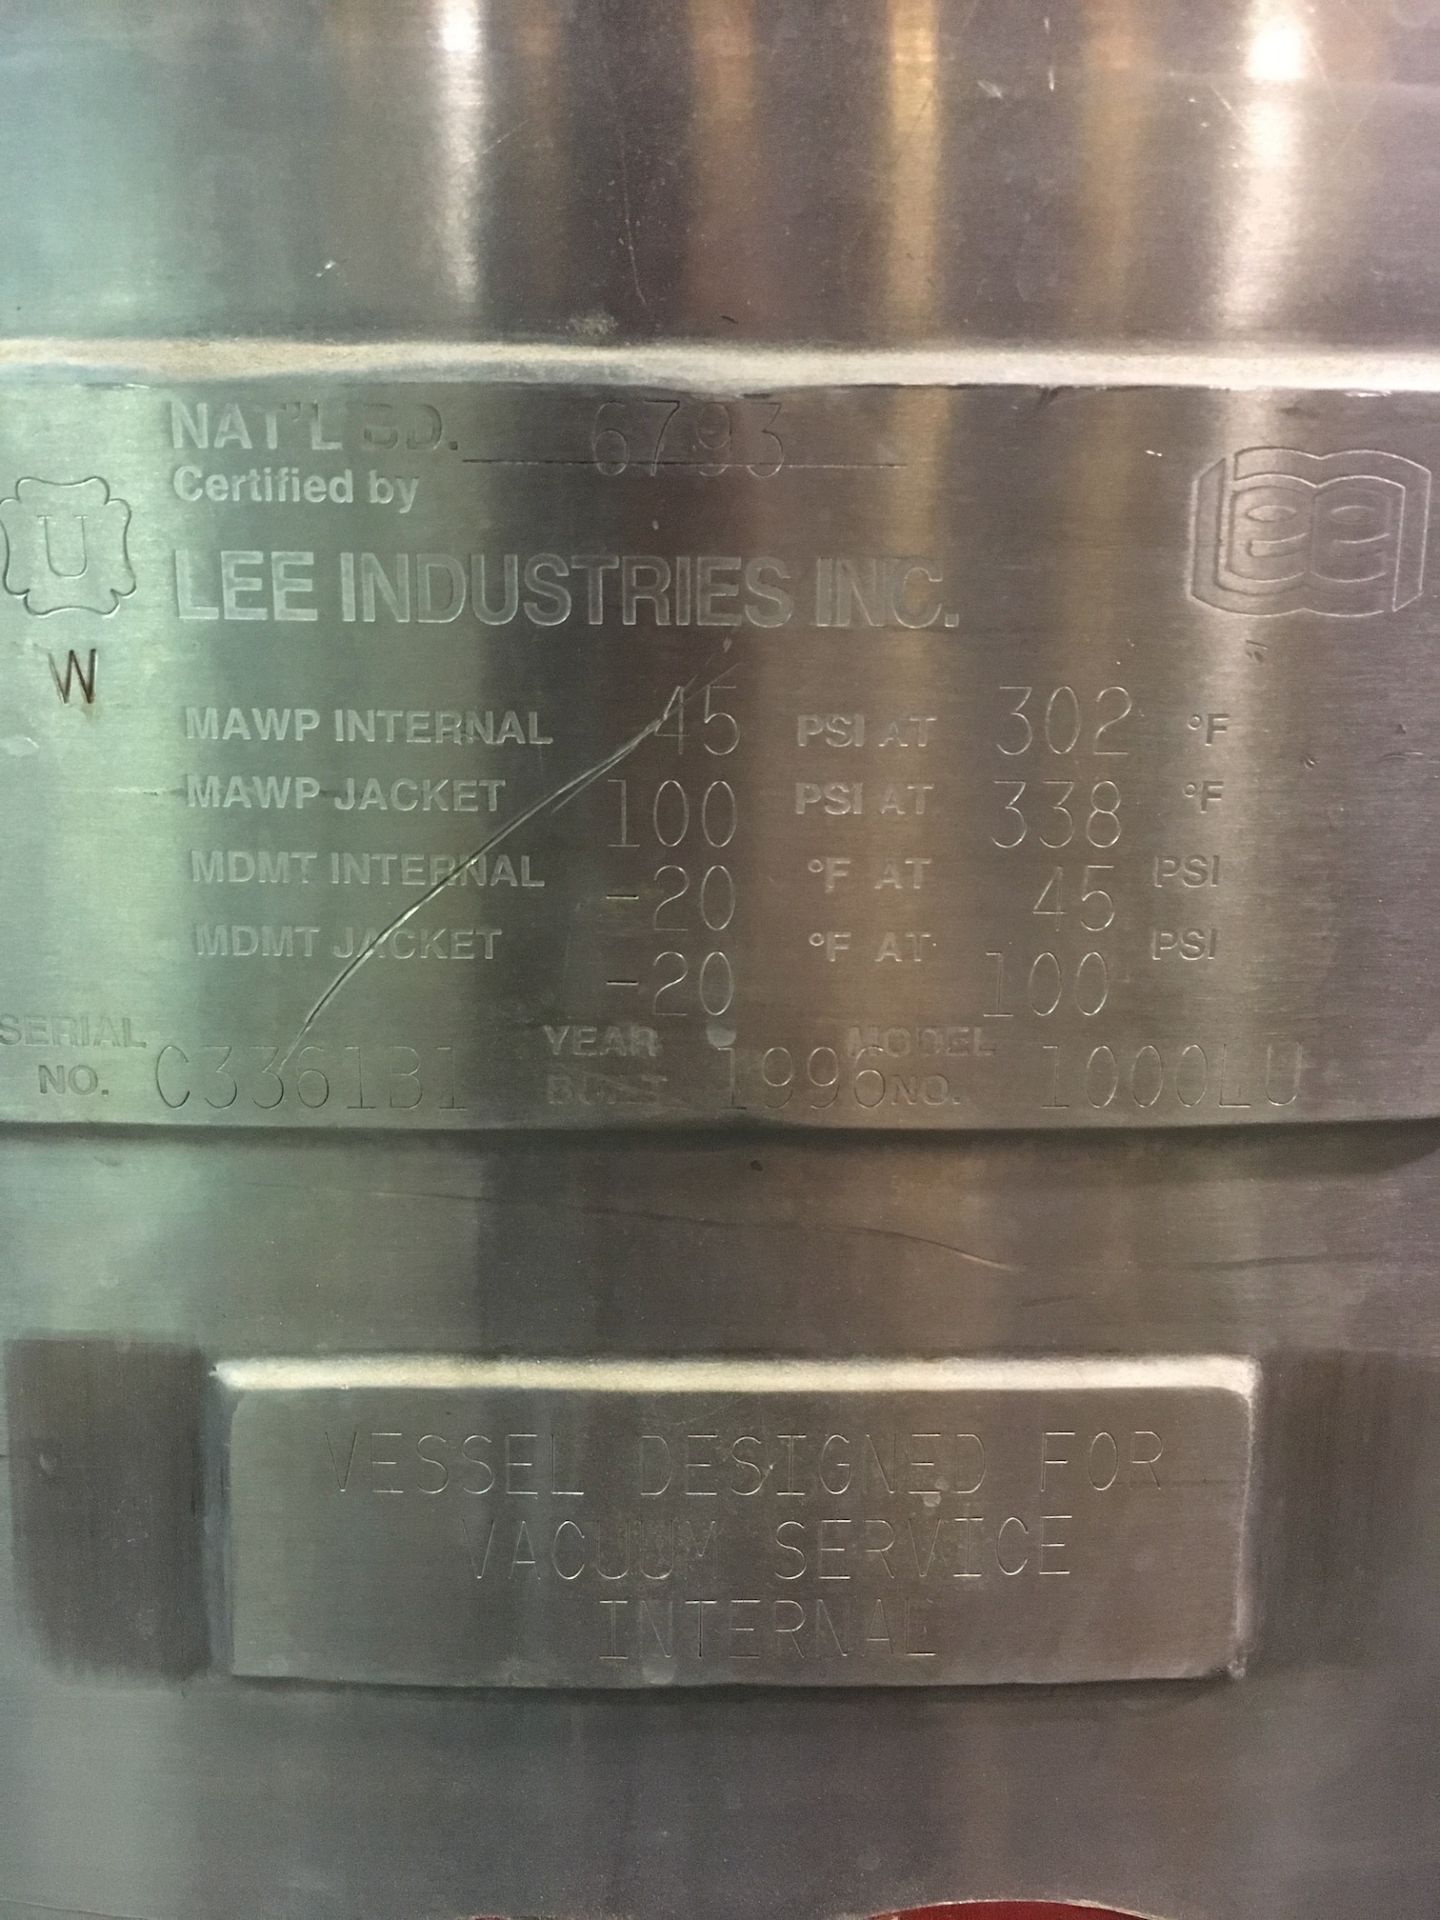 Lee Industries 1000 Liter Portable Stainless Steel Jacketed Vessel - Image 2 of 4